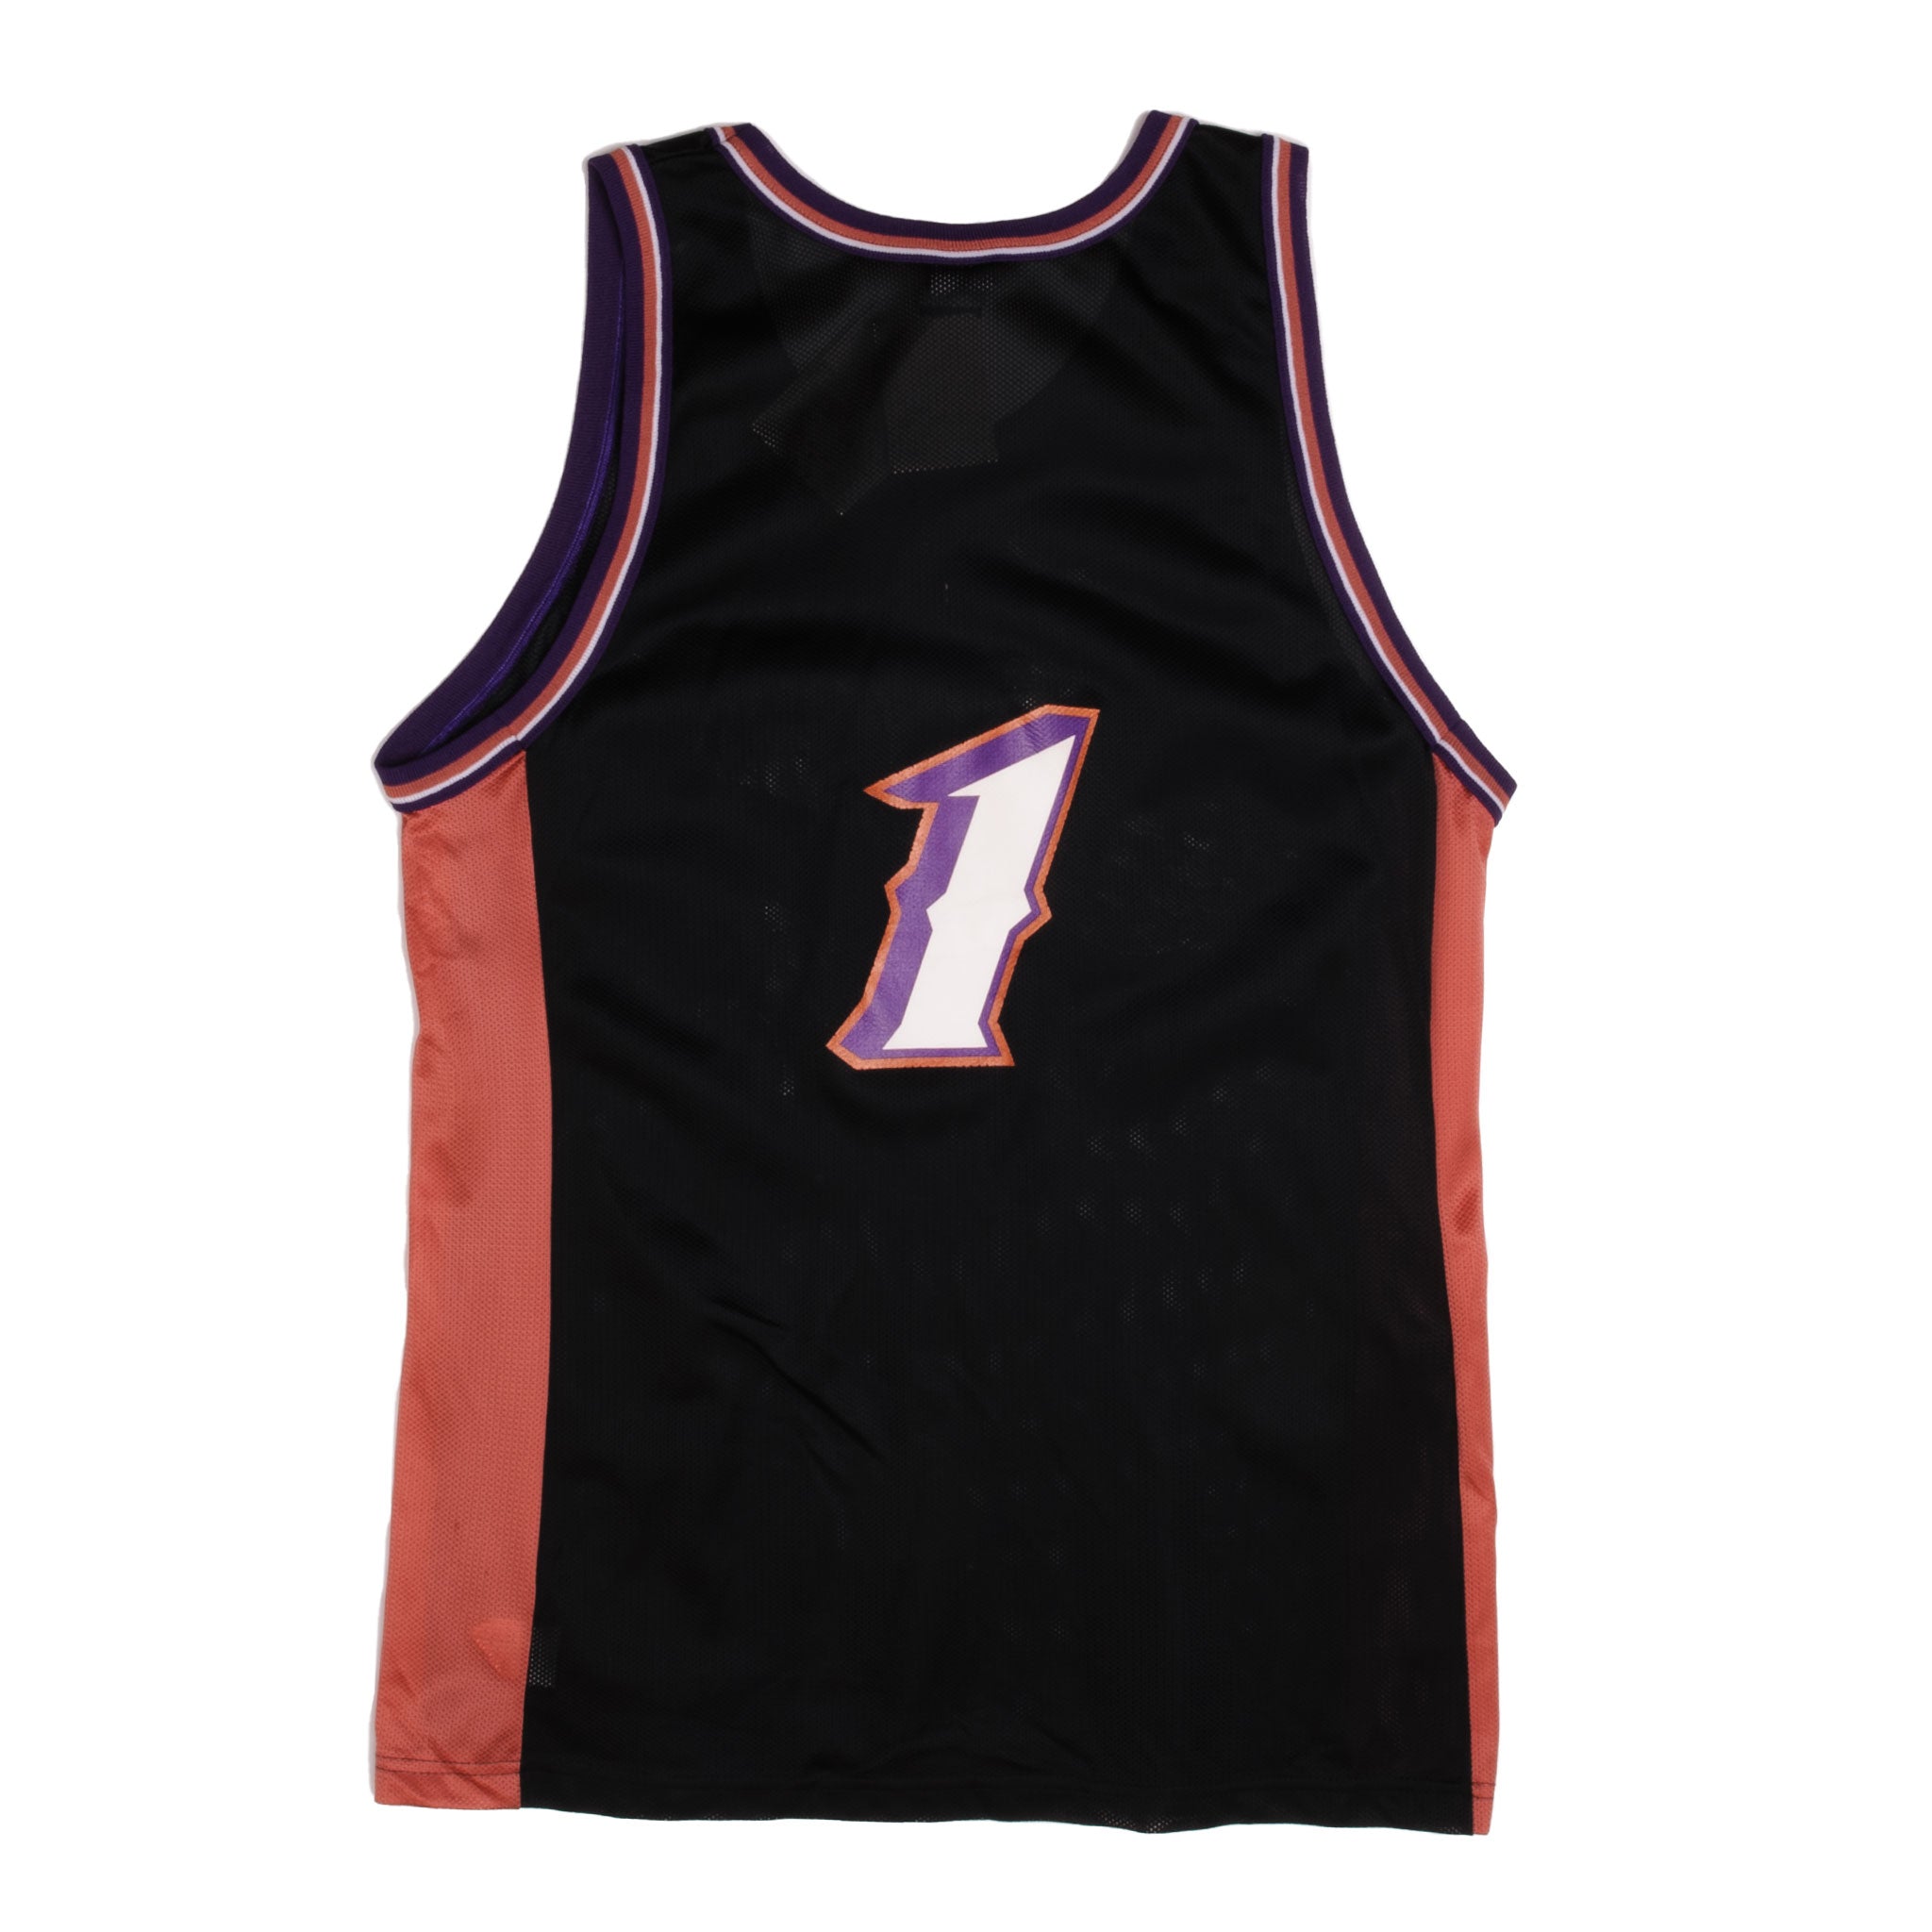 Vintage Deadstock Champion NBA Utah Jazz Jersey 1990s Size 44 NOS